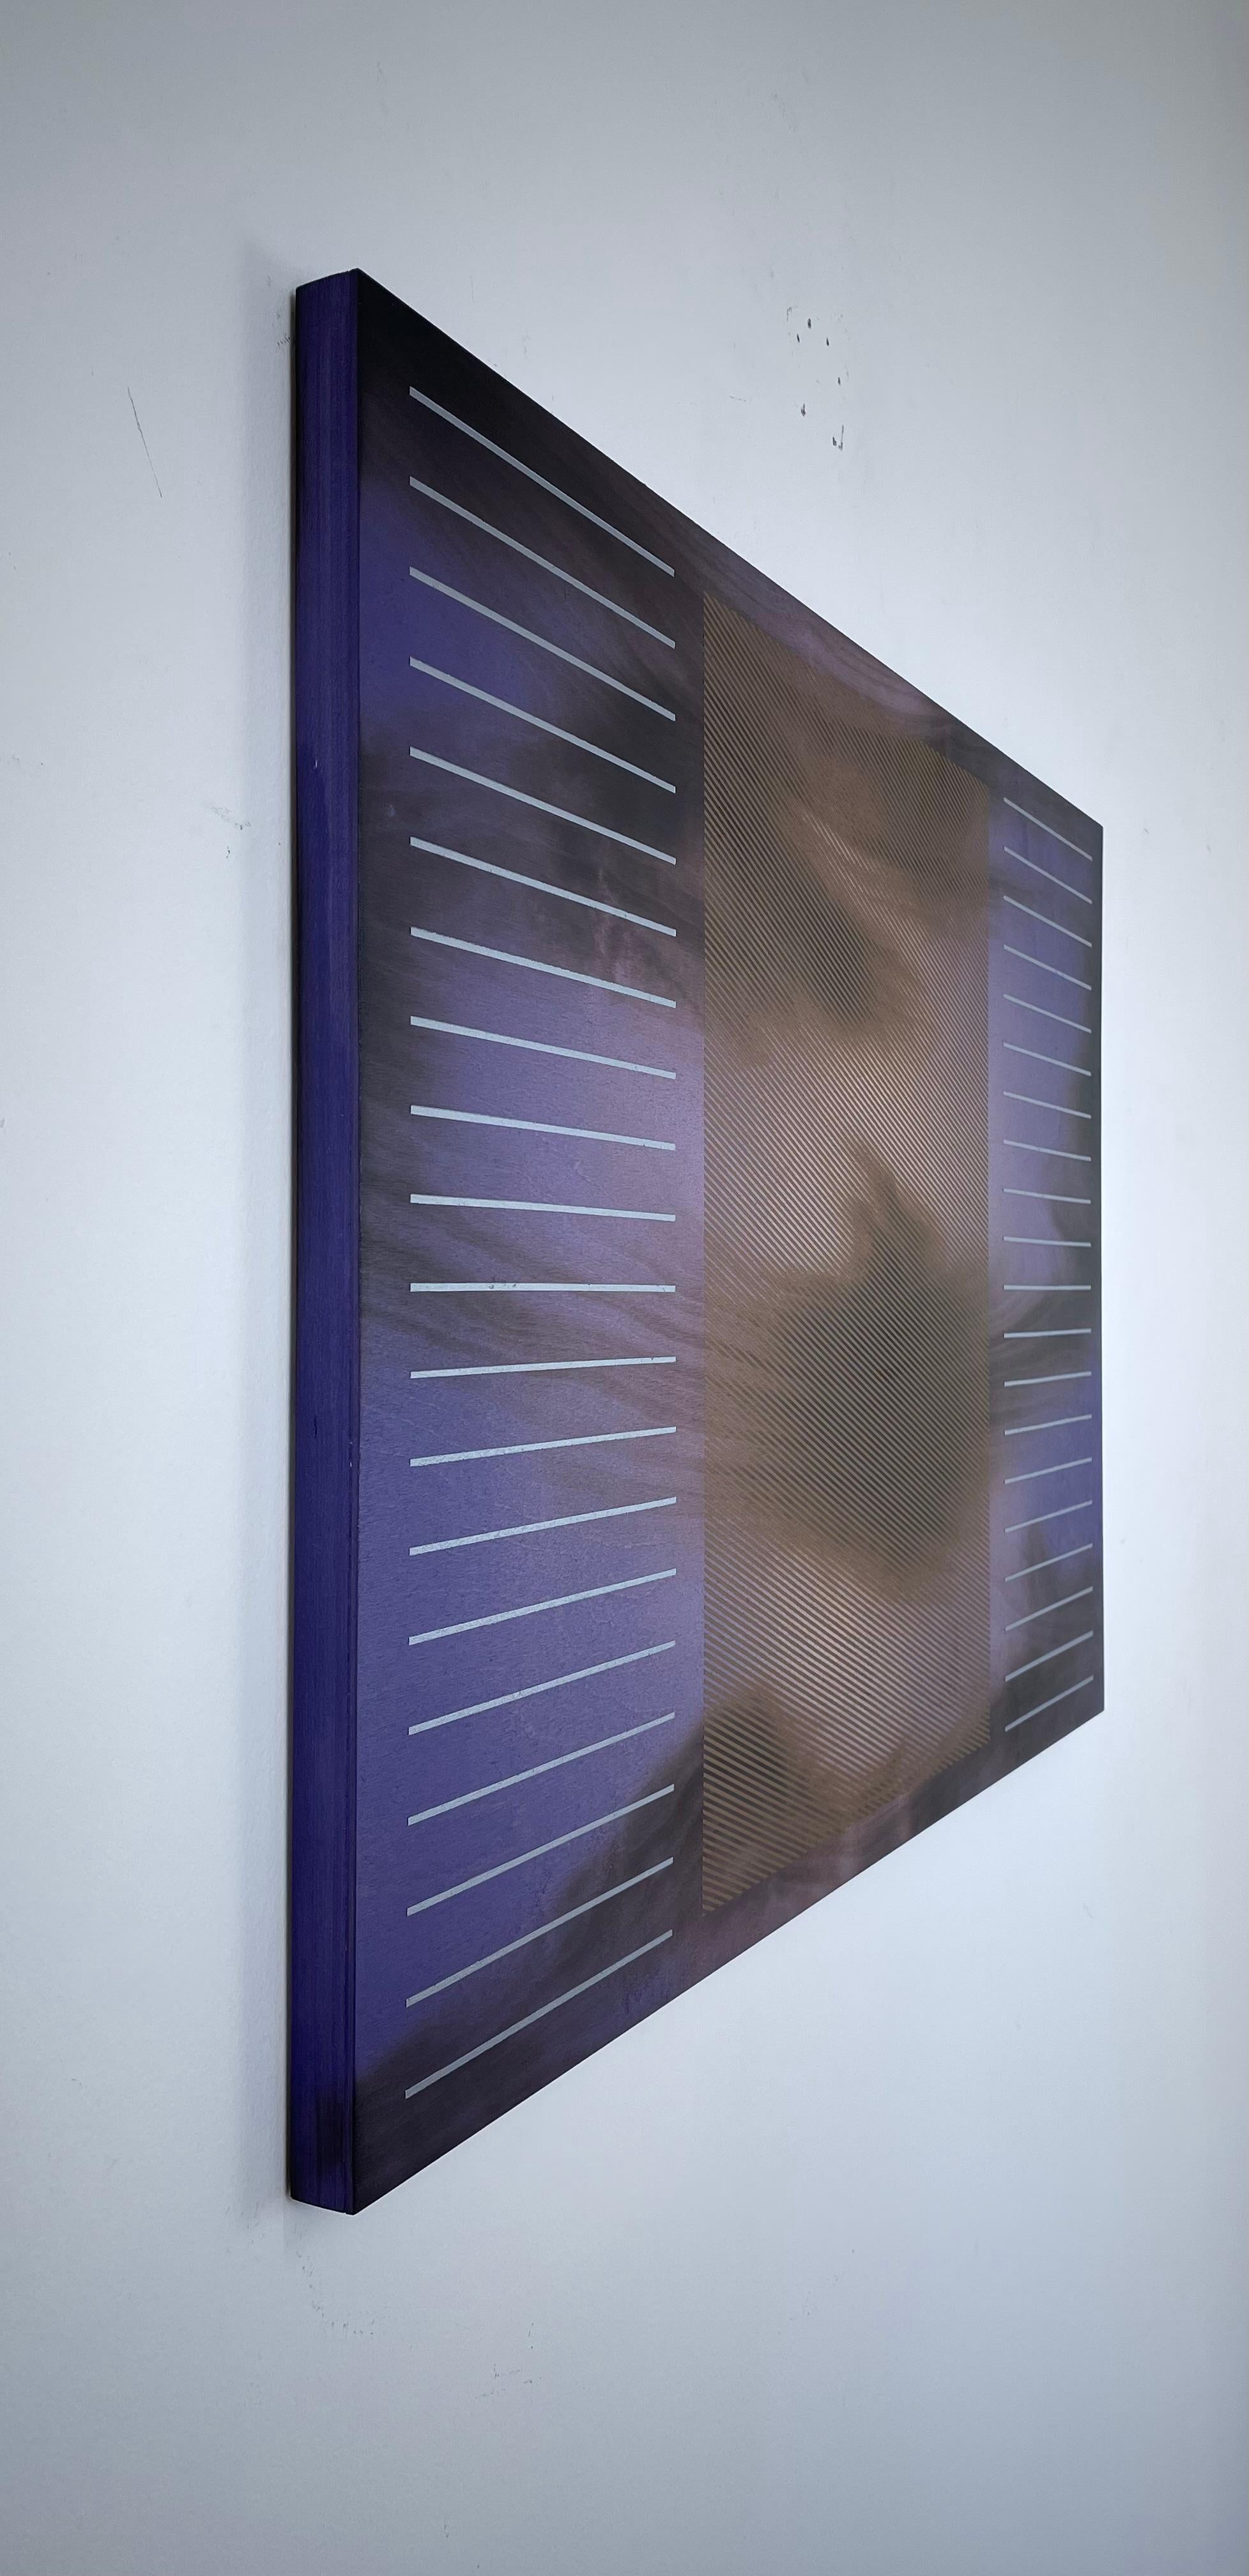 Stages 3 ( Lila Tonik, digitaler Lavander, minimales Raster, silberne feine Linien) (Geometrische Abstraktion), Painting, von Melisa Taylor Metzger